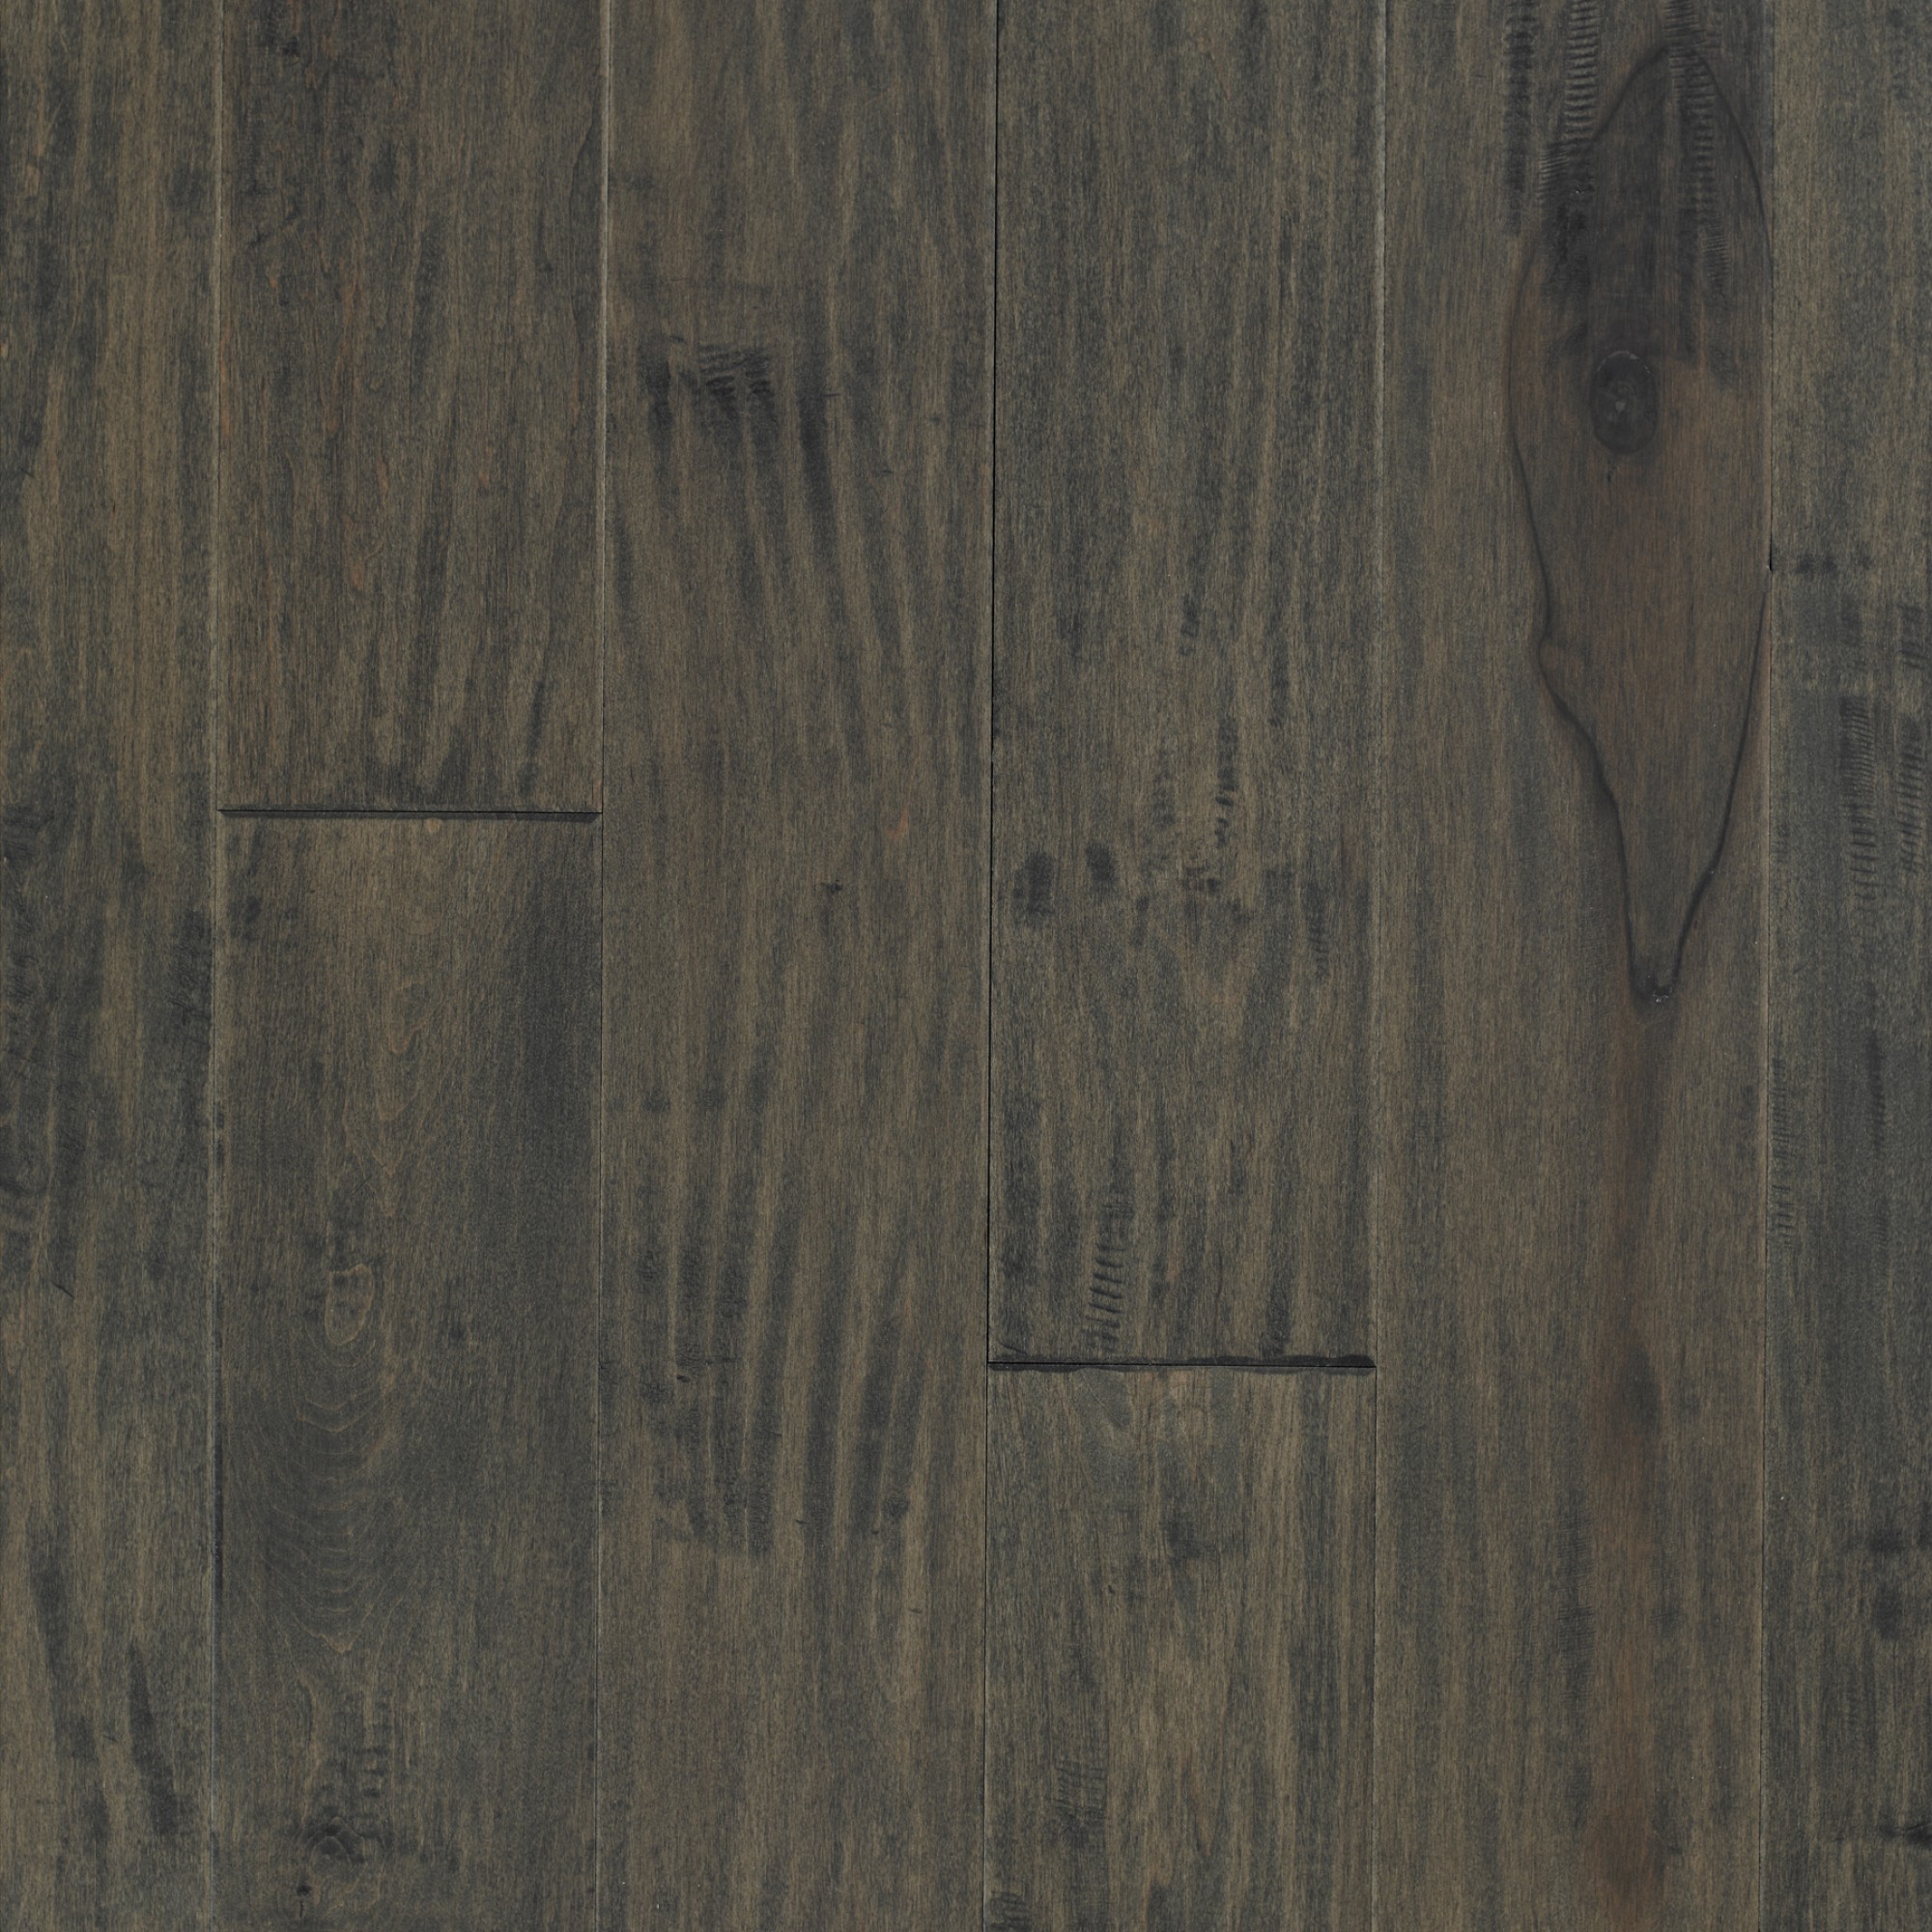 Nebula Maple Hs Boardwalk Hardwood Floors